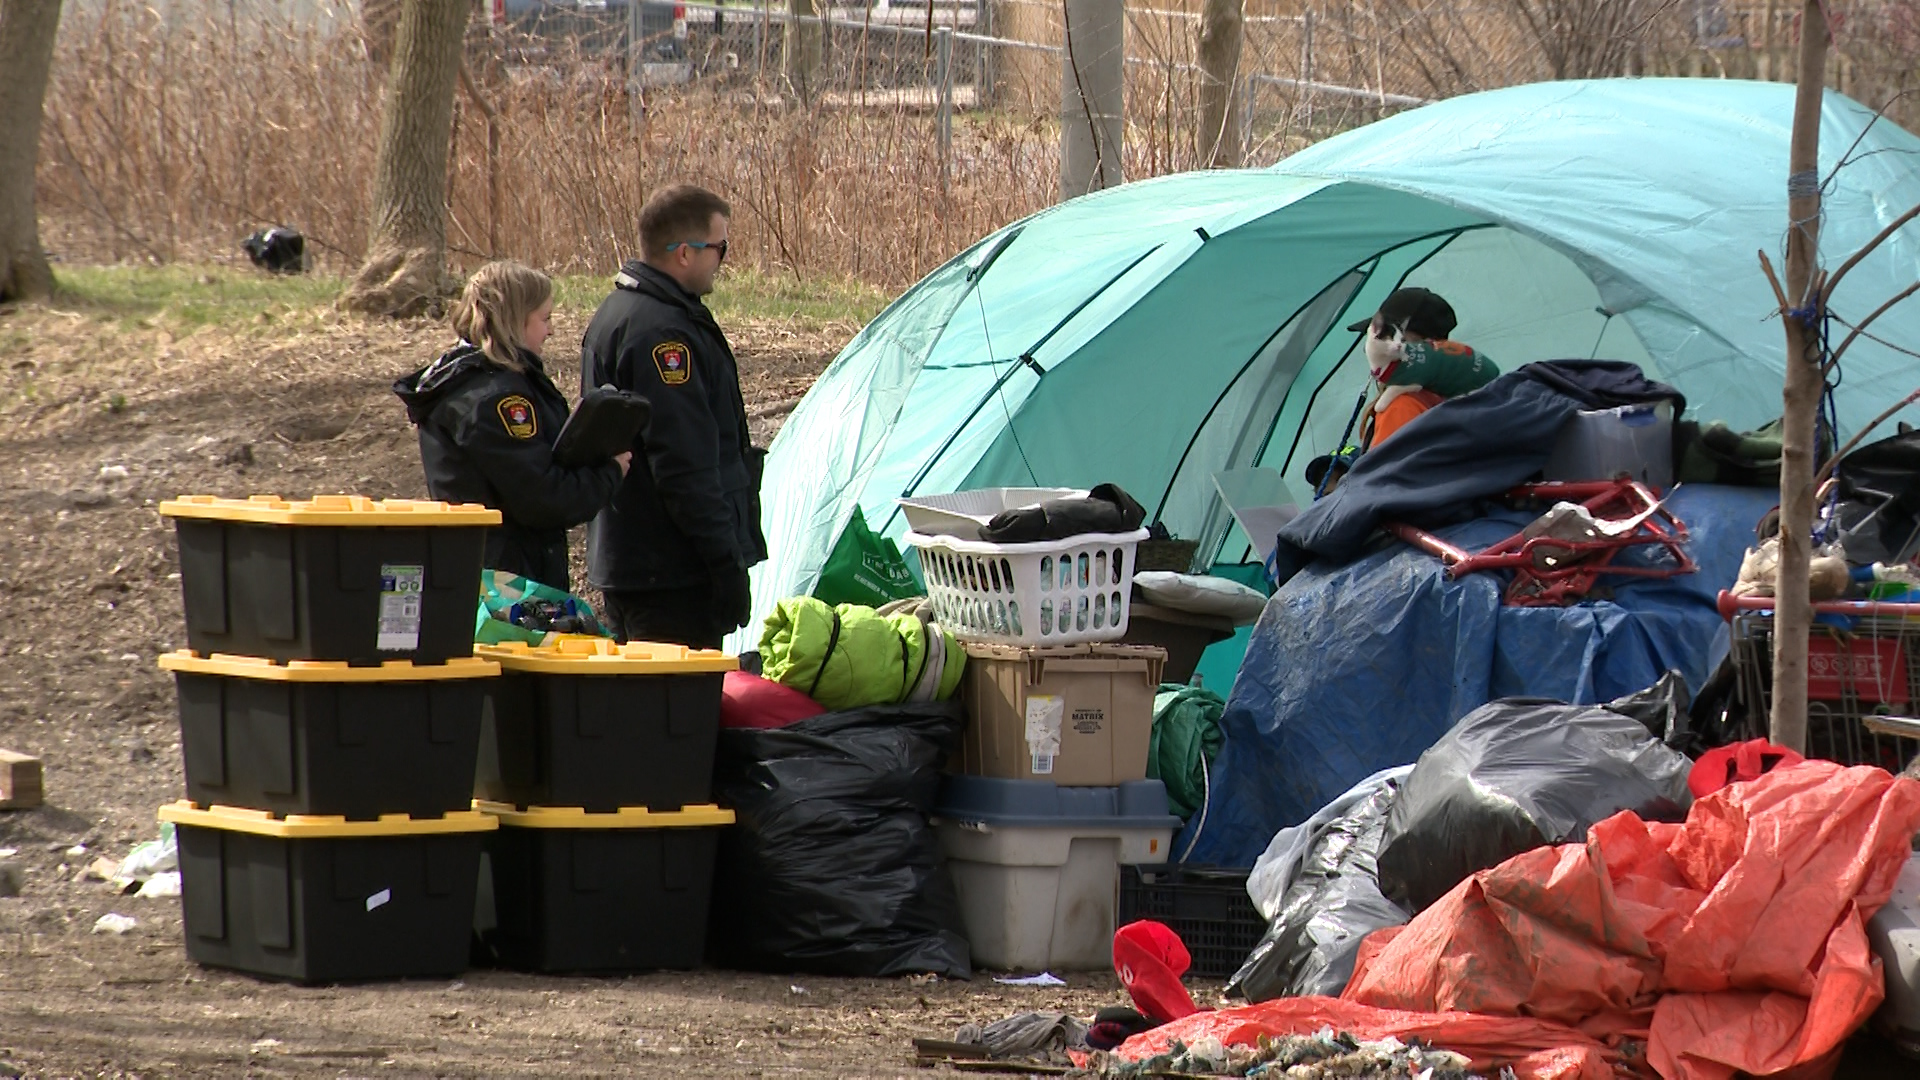 City of Kingston begins enforcing daytime camping ban, residents dig in